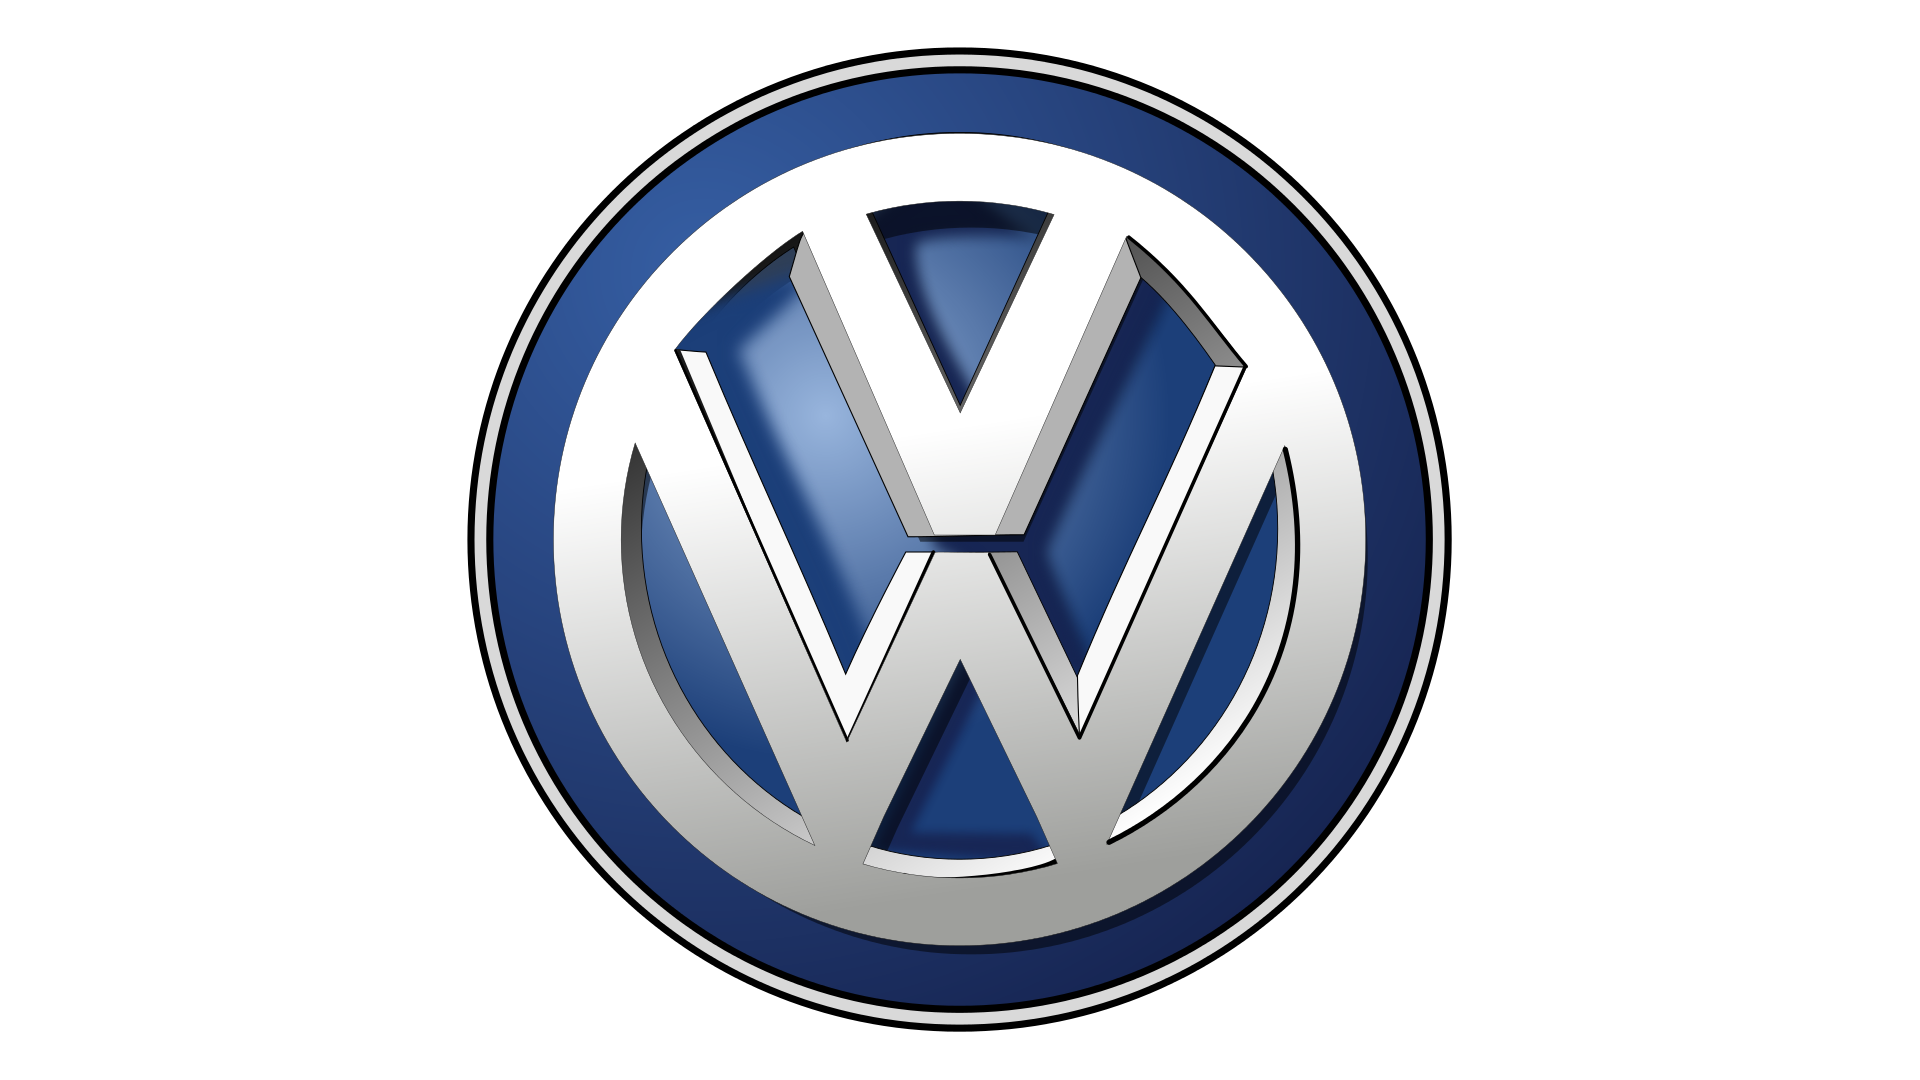 Car Logos, Car Company Logos, List of car logos